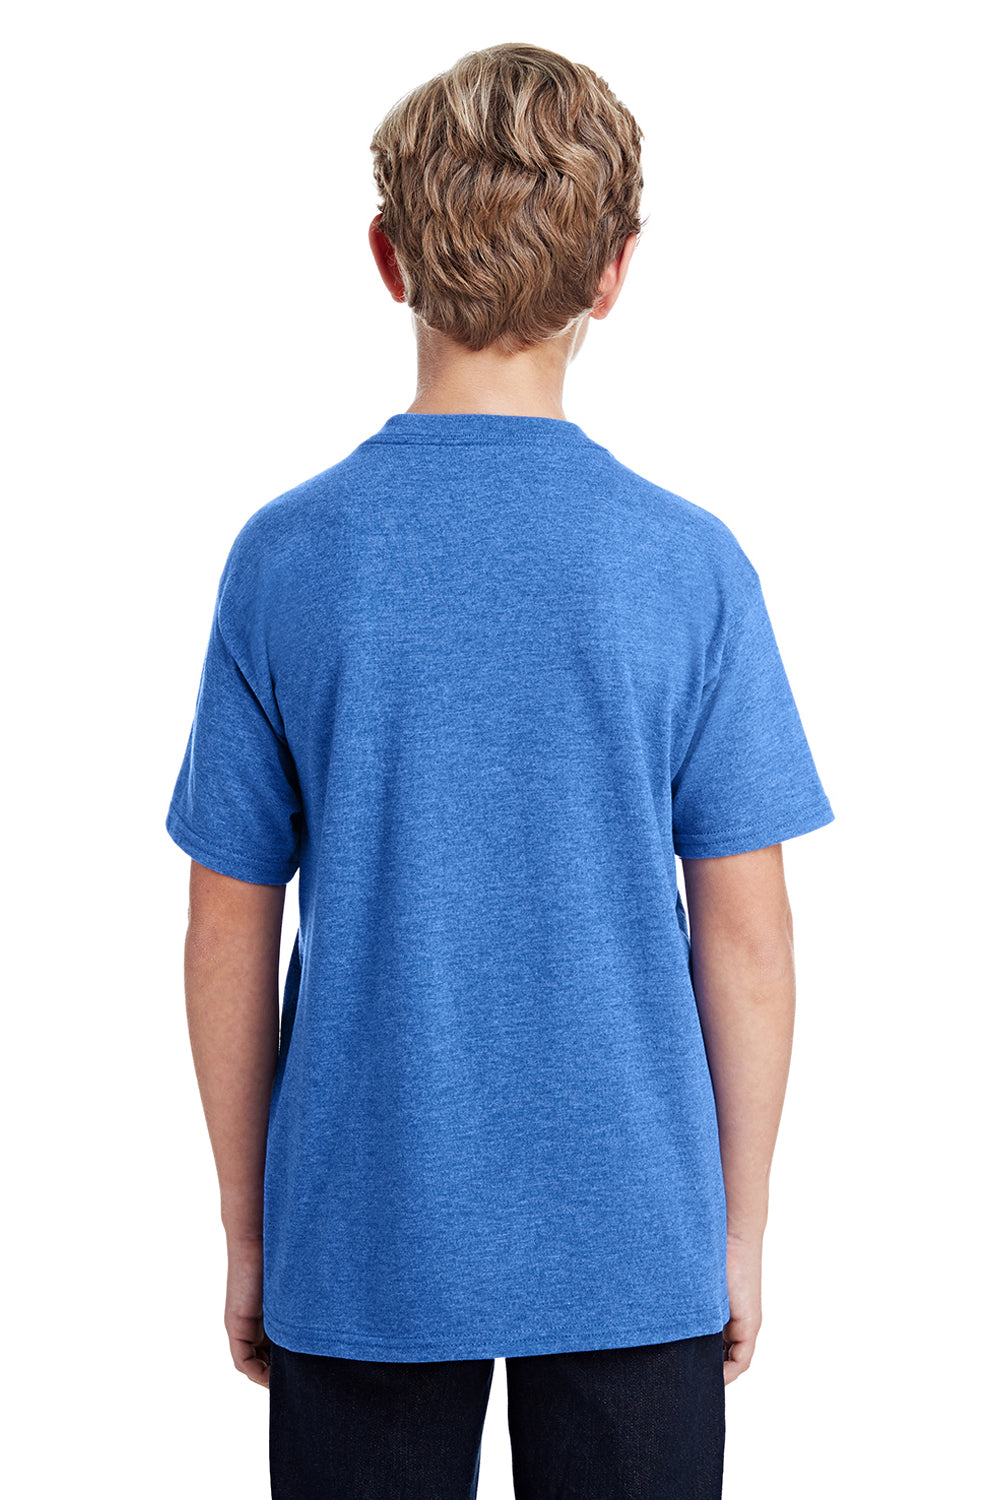 Gildan G800B Youth DryBlend Moisture Wicking Short Sleeve Crewneck T-Shirt Heather Royal Blue Back